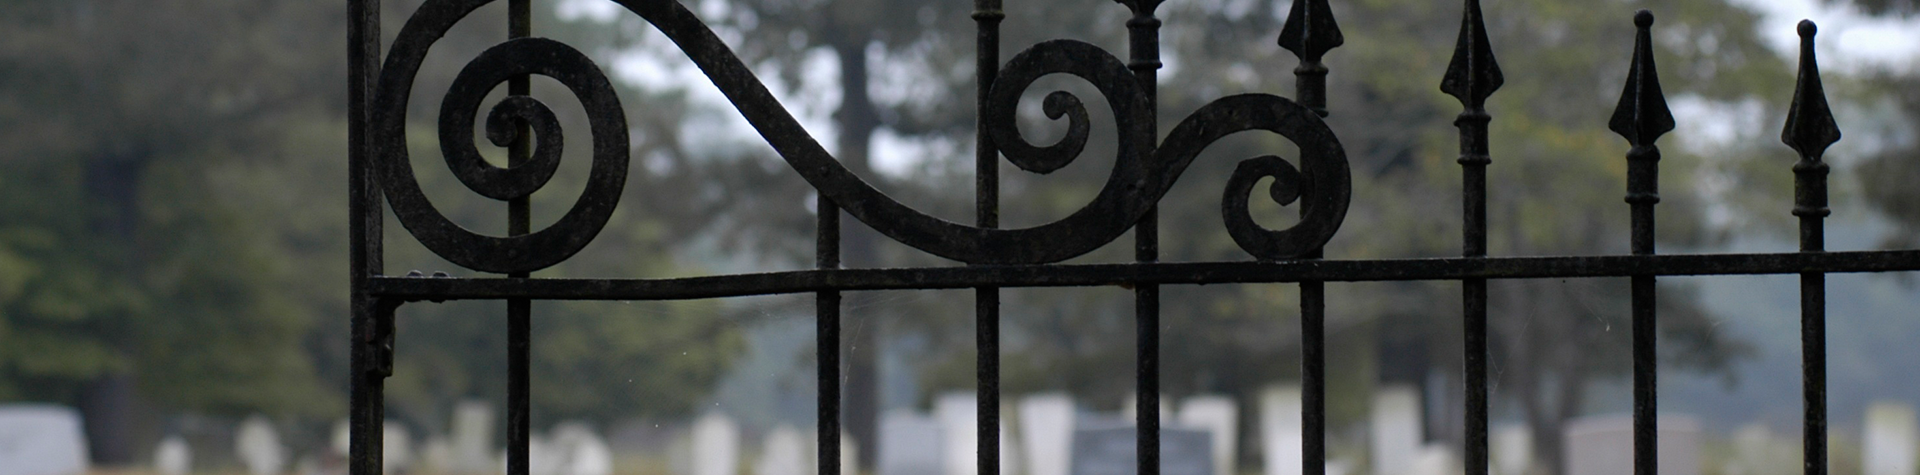 cemetery_gates